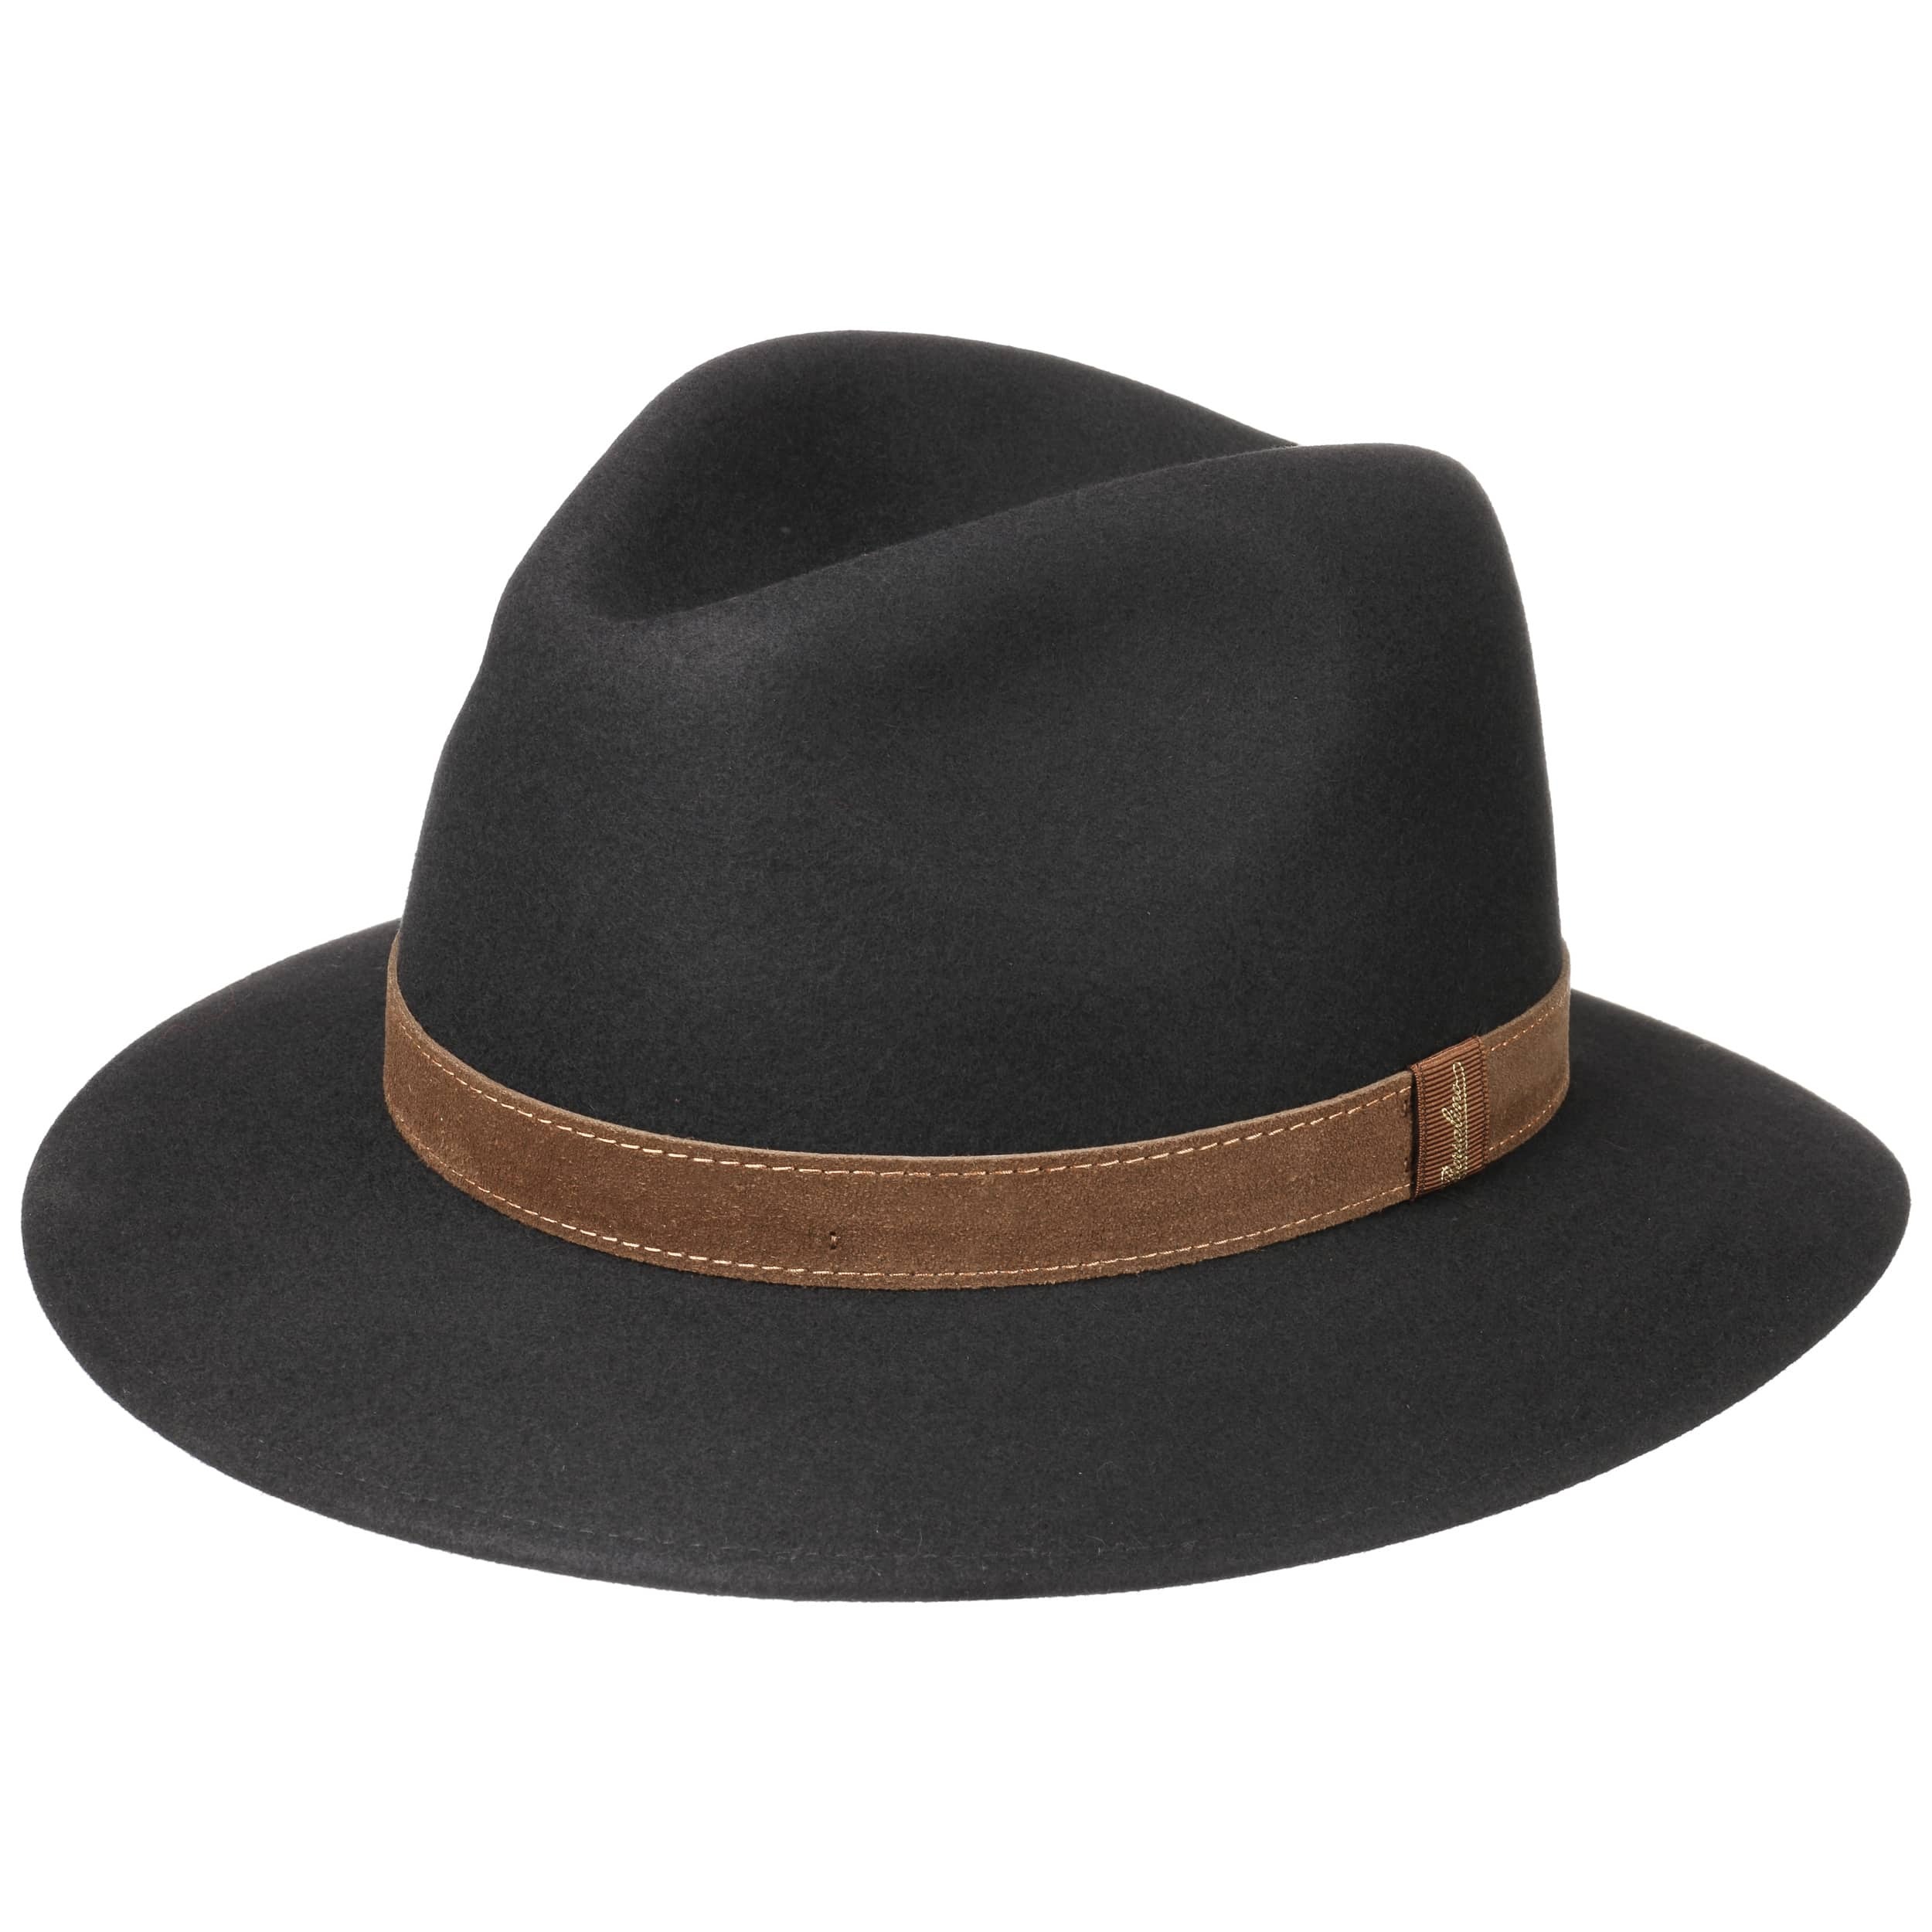 Borsalino Nero Pack Away Hat, EUR 299,00 --> Hats, caps & beanies shop